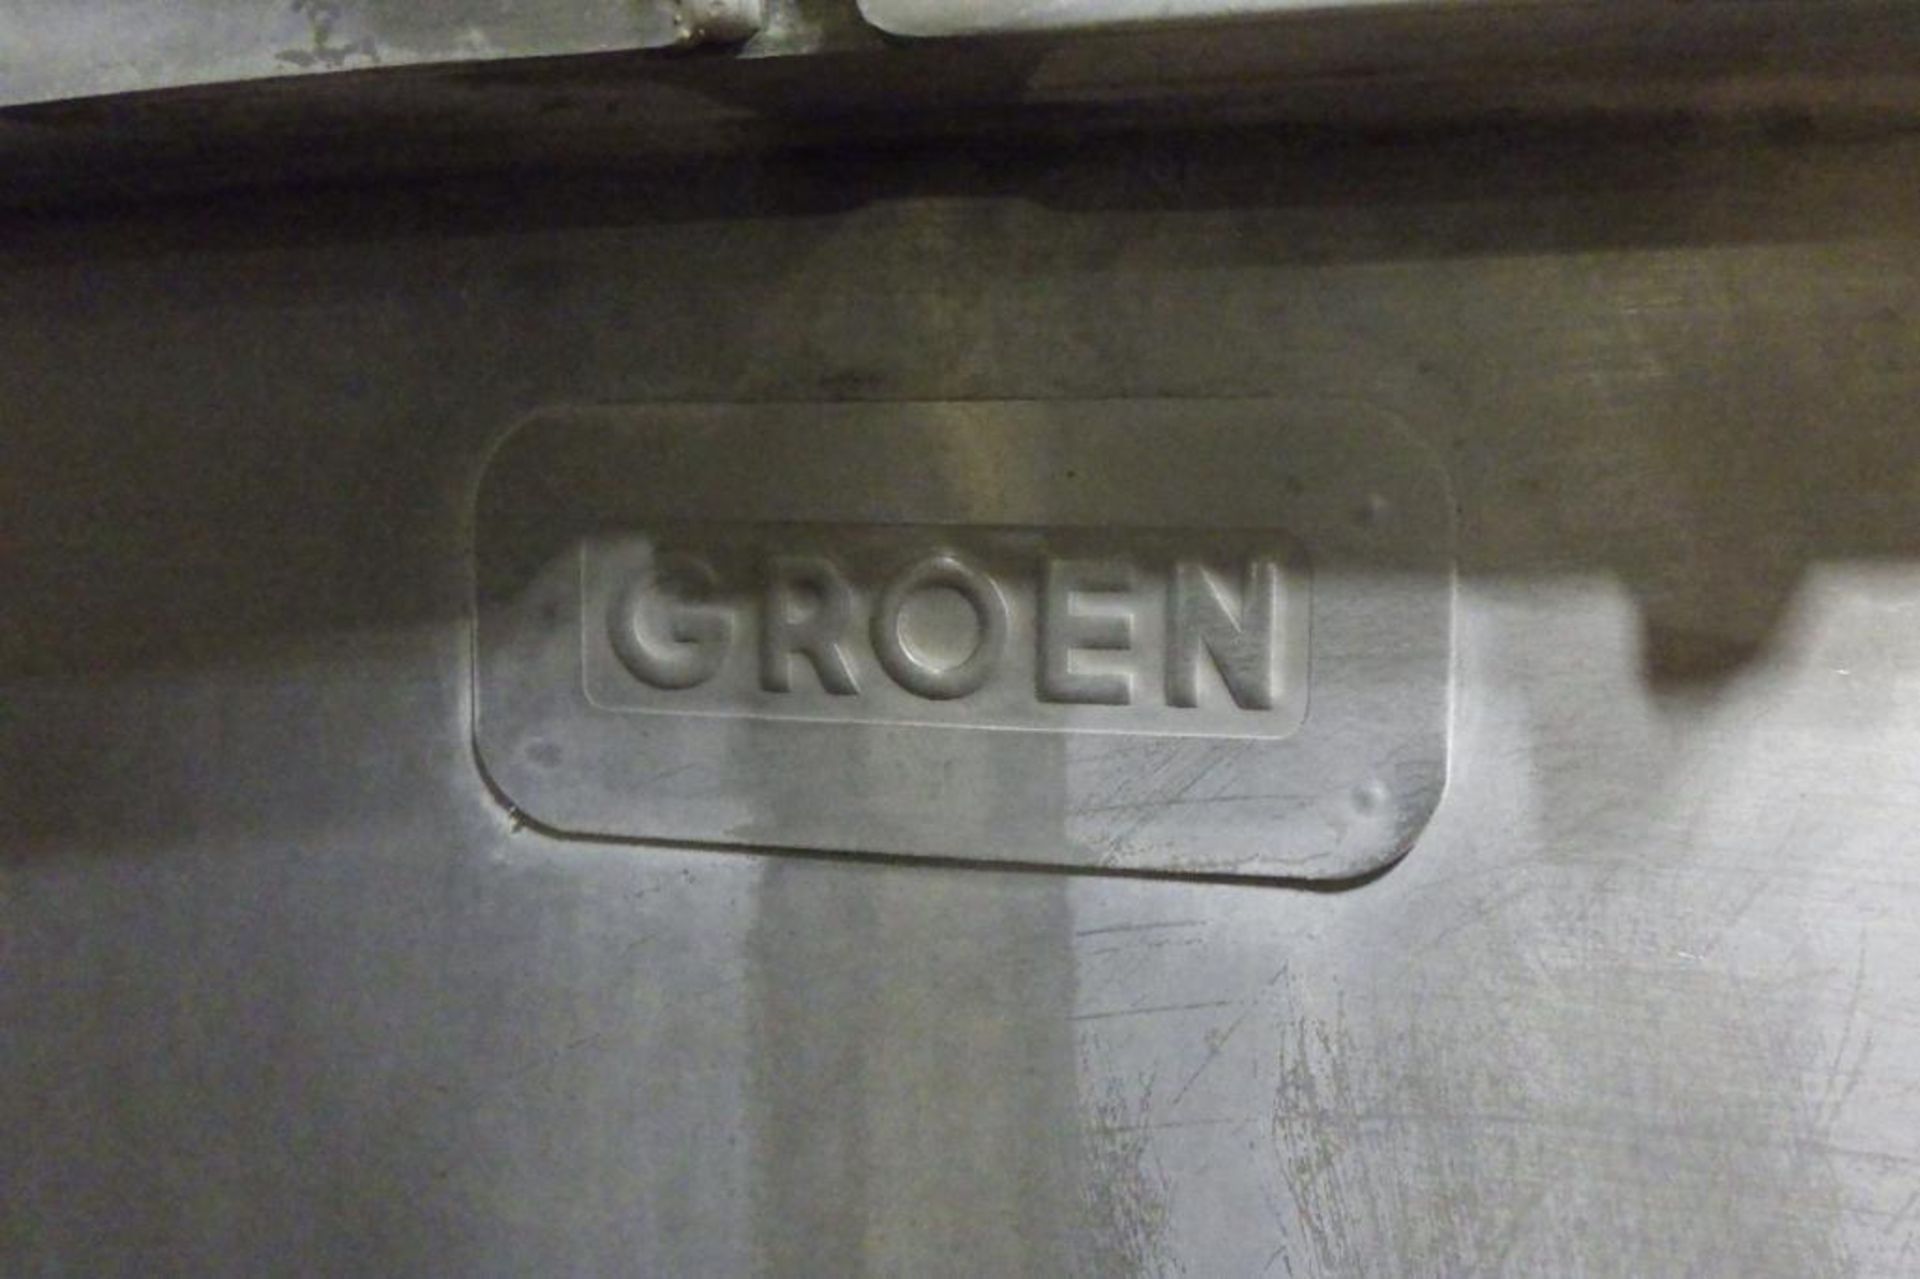 Groen kettle - Bild 11 aus 15